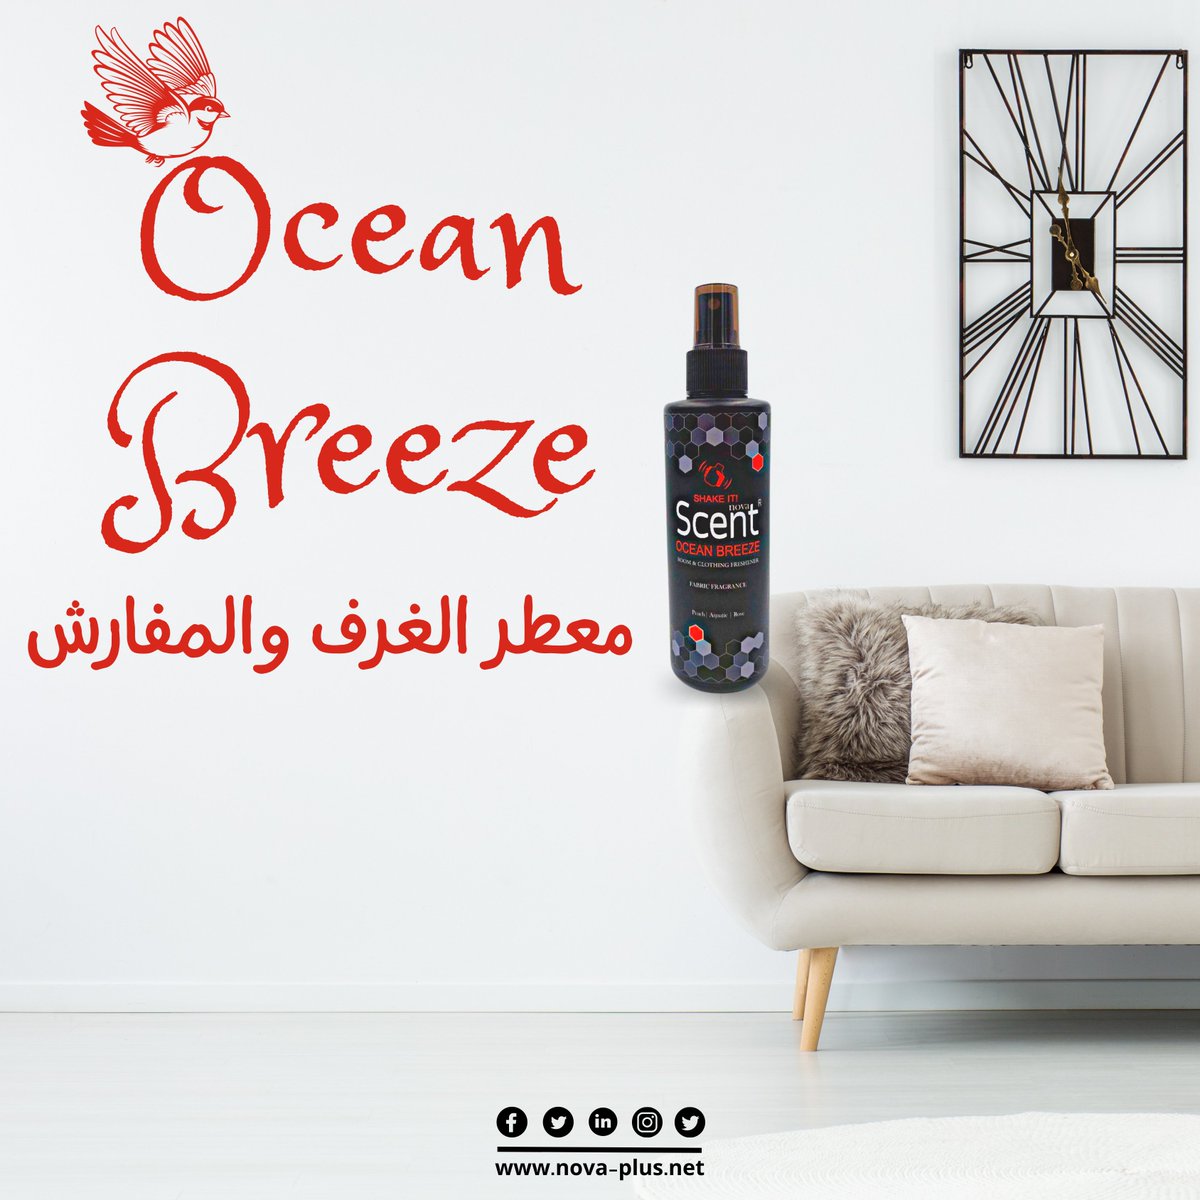 Nova Plus International Trading

Product: Nova Scent Ocean Breeze

Room & Clothing Freshener

 #scent #oceanbreeze #oceanbreezes #freshener #airfreshener #roomfreshener #carairfreshener